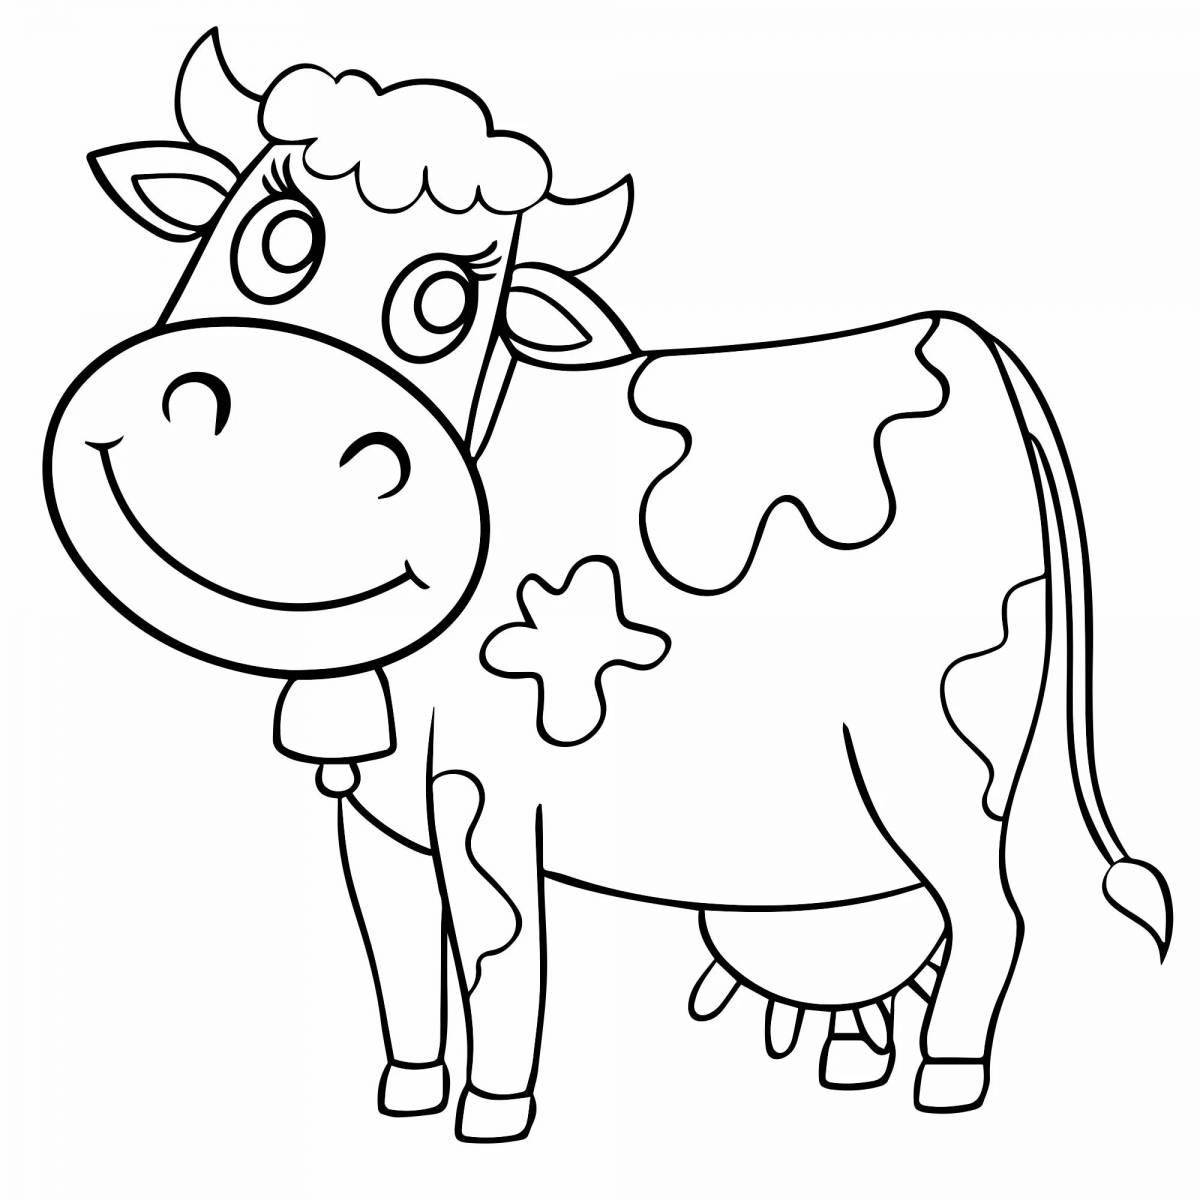 Adorable cow and calf coloring book